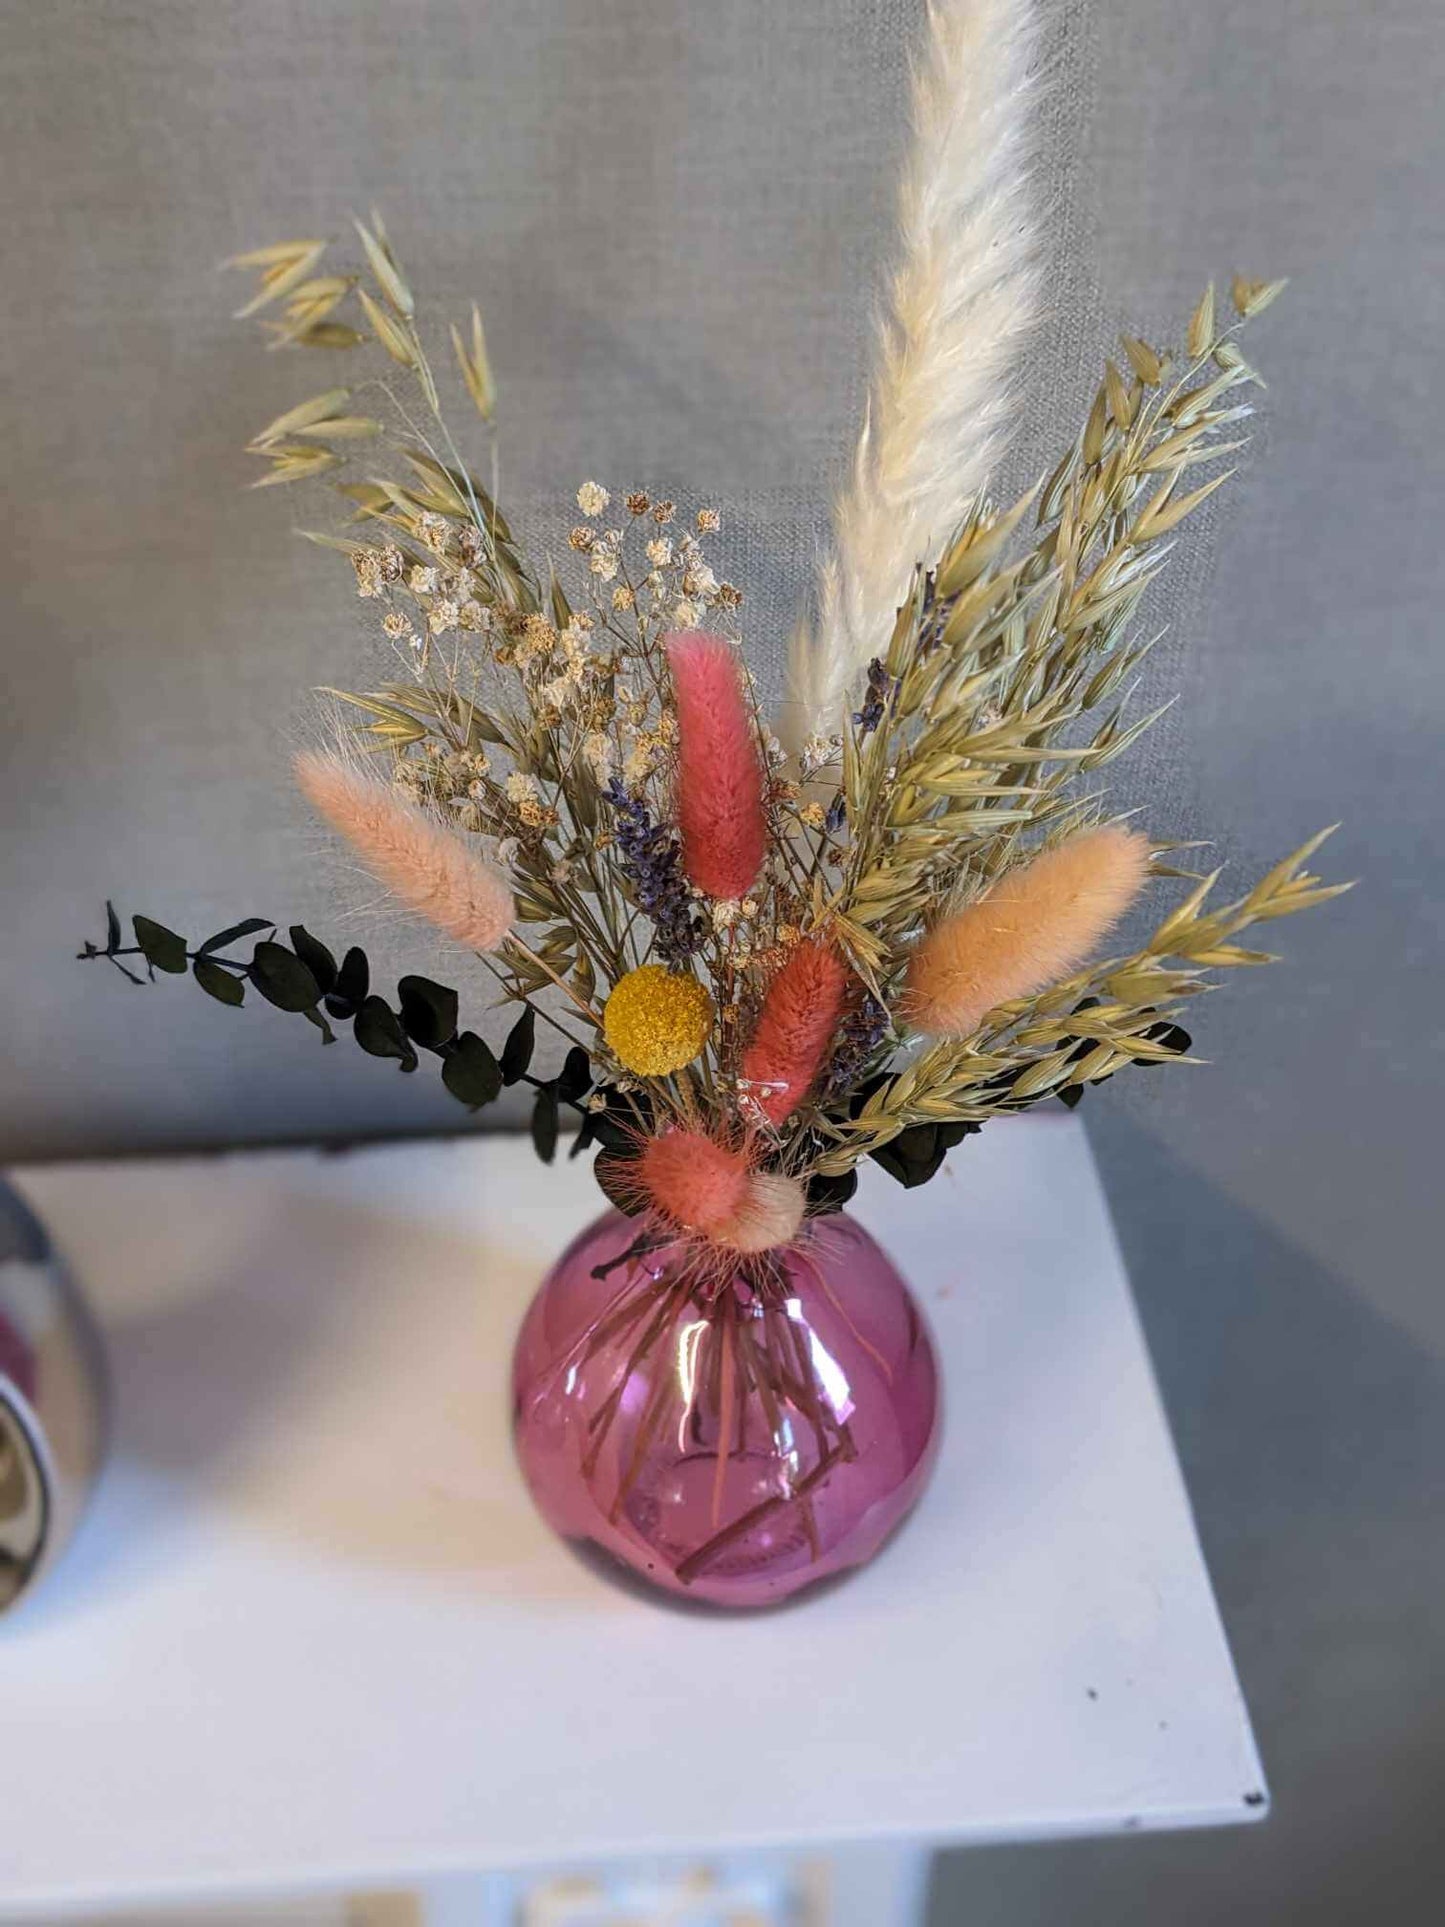 Camille Pink Vase Arrangement